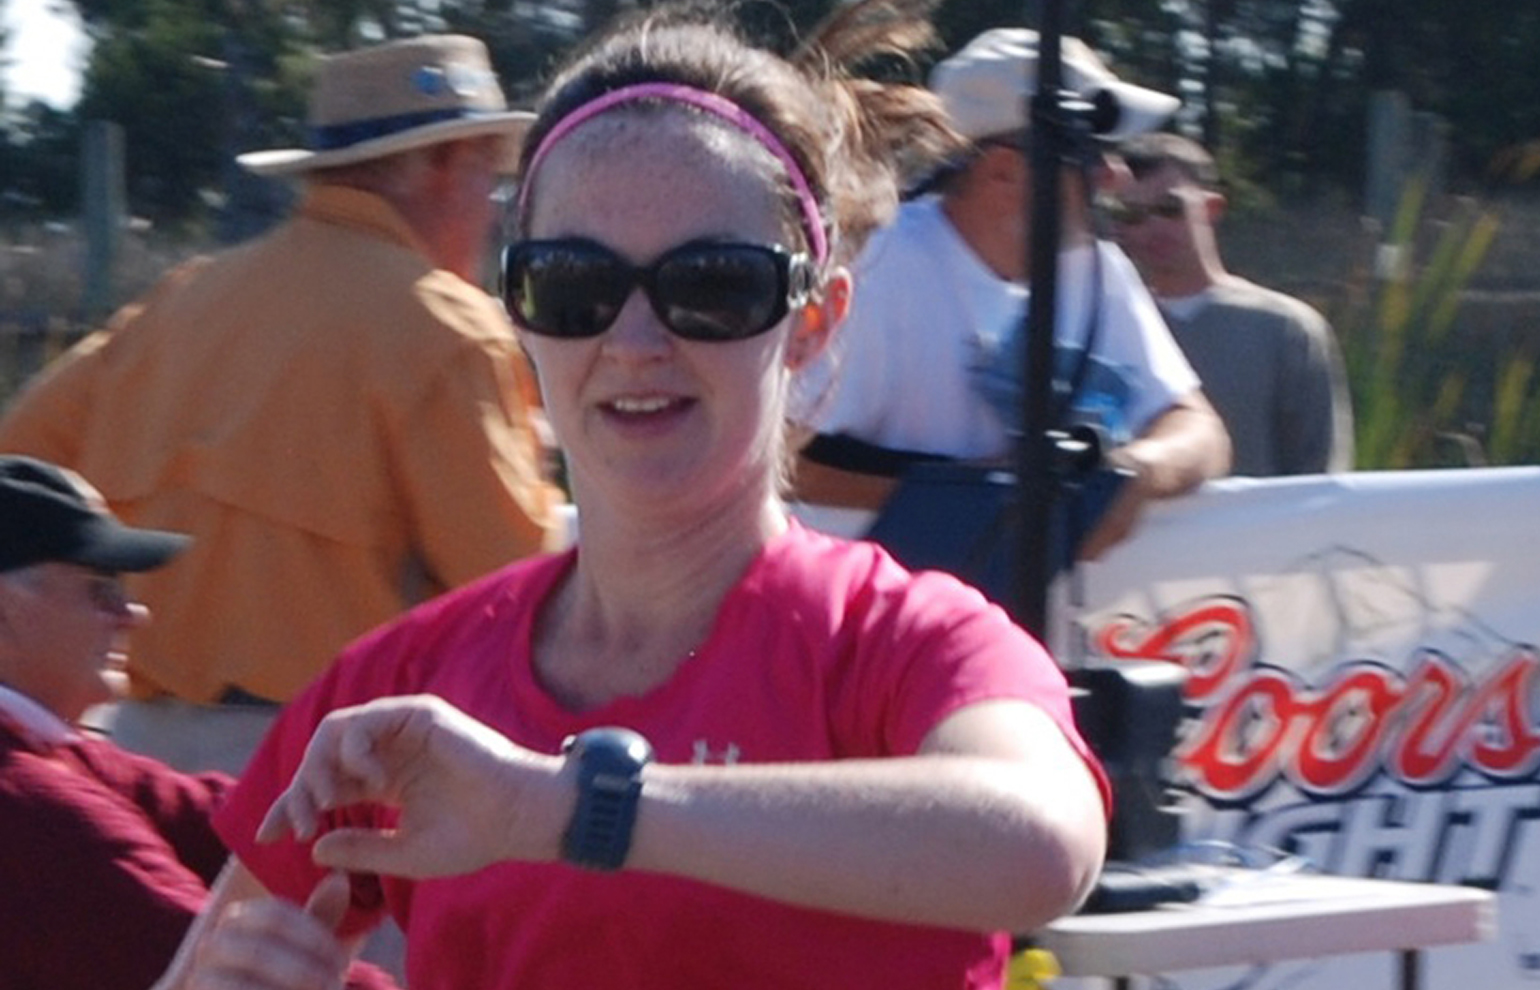 Beth Graham, 30, of Fairfax, Va., is preparing to run in the Marine Corps Marathon, her sixth marathon.